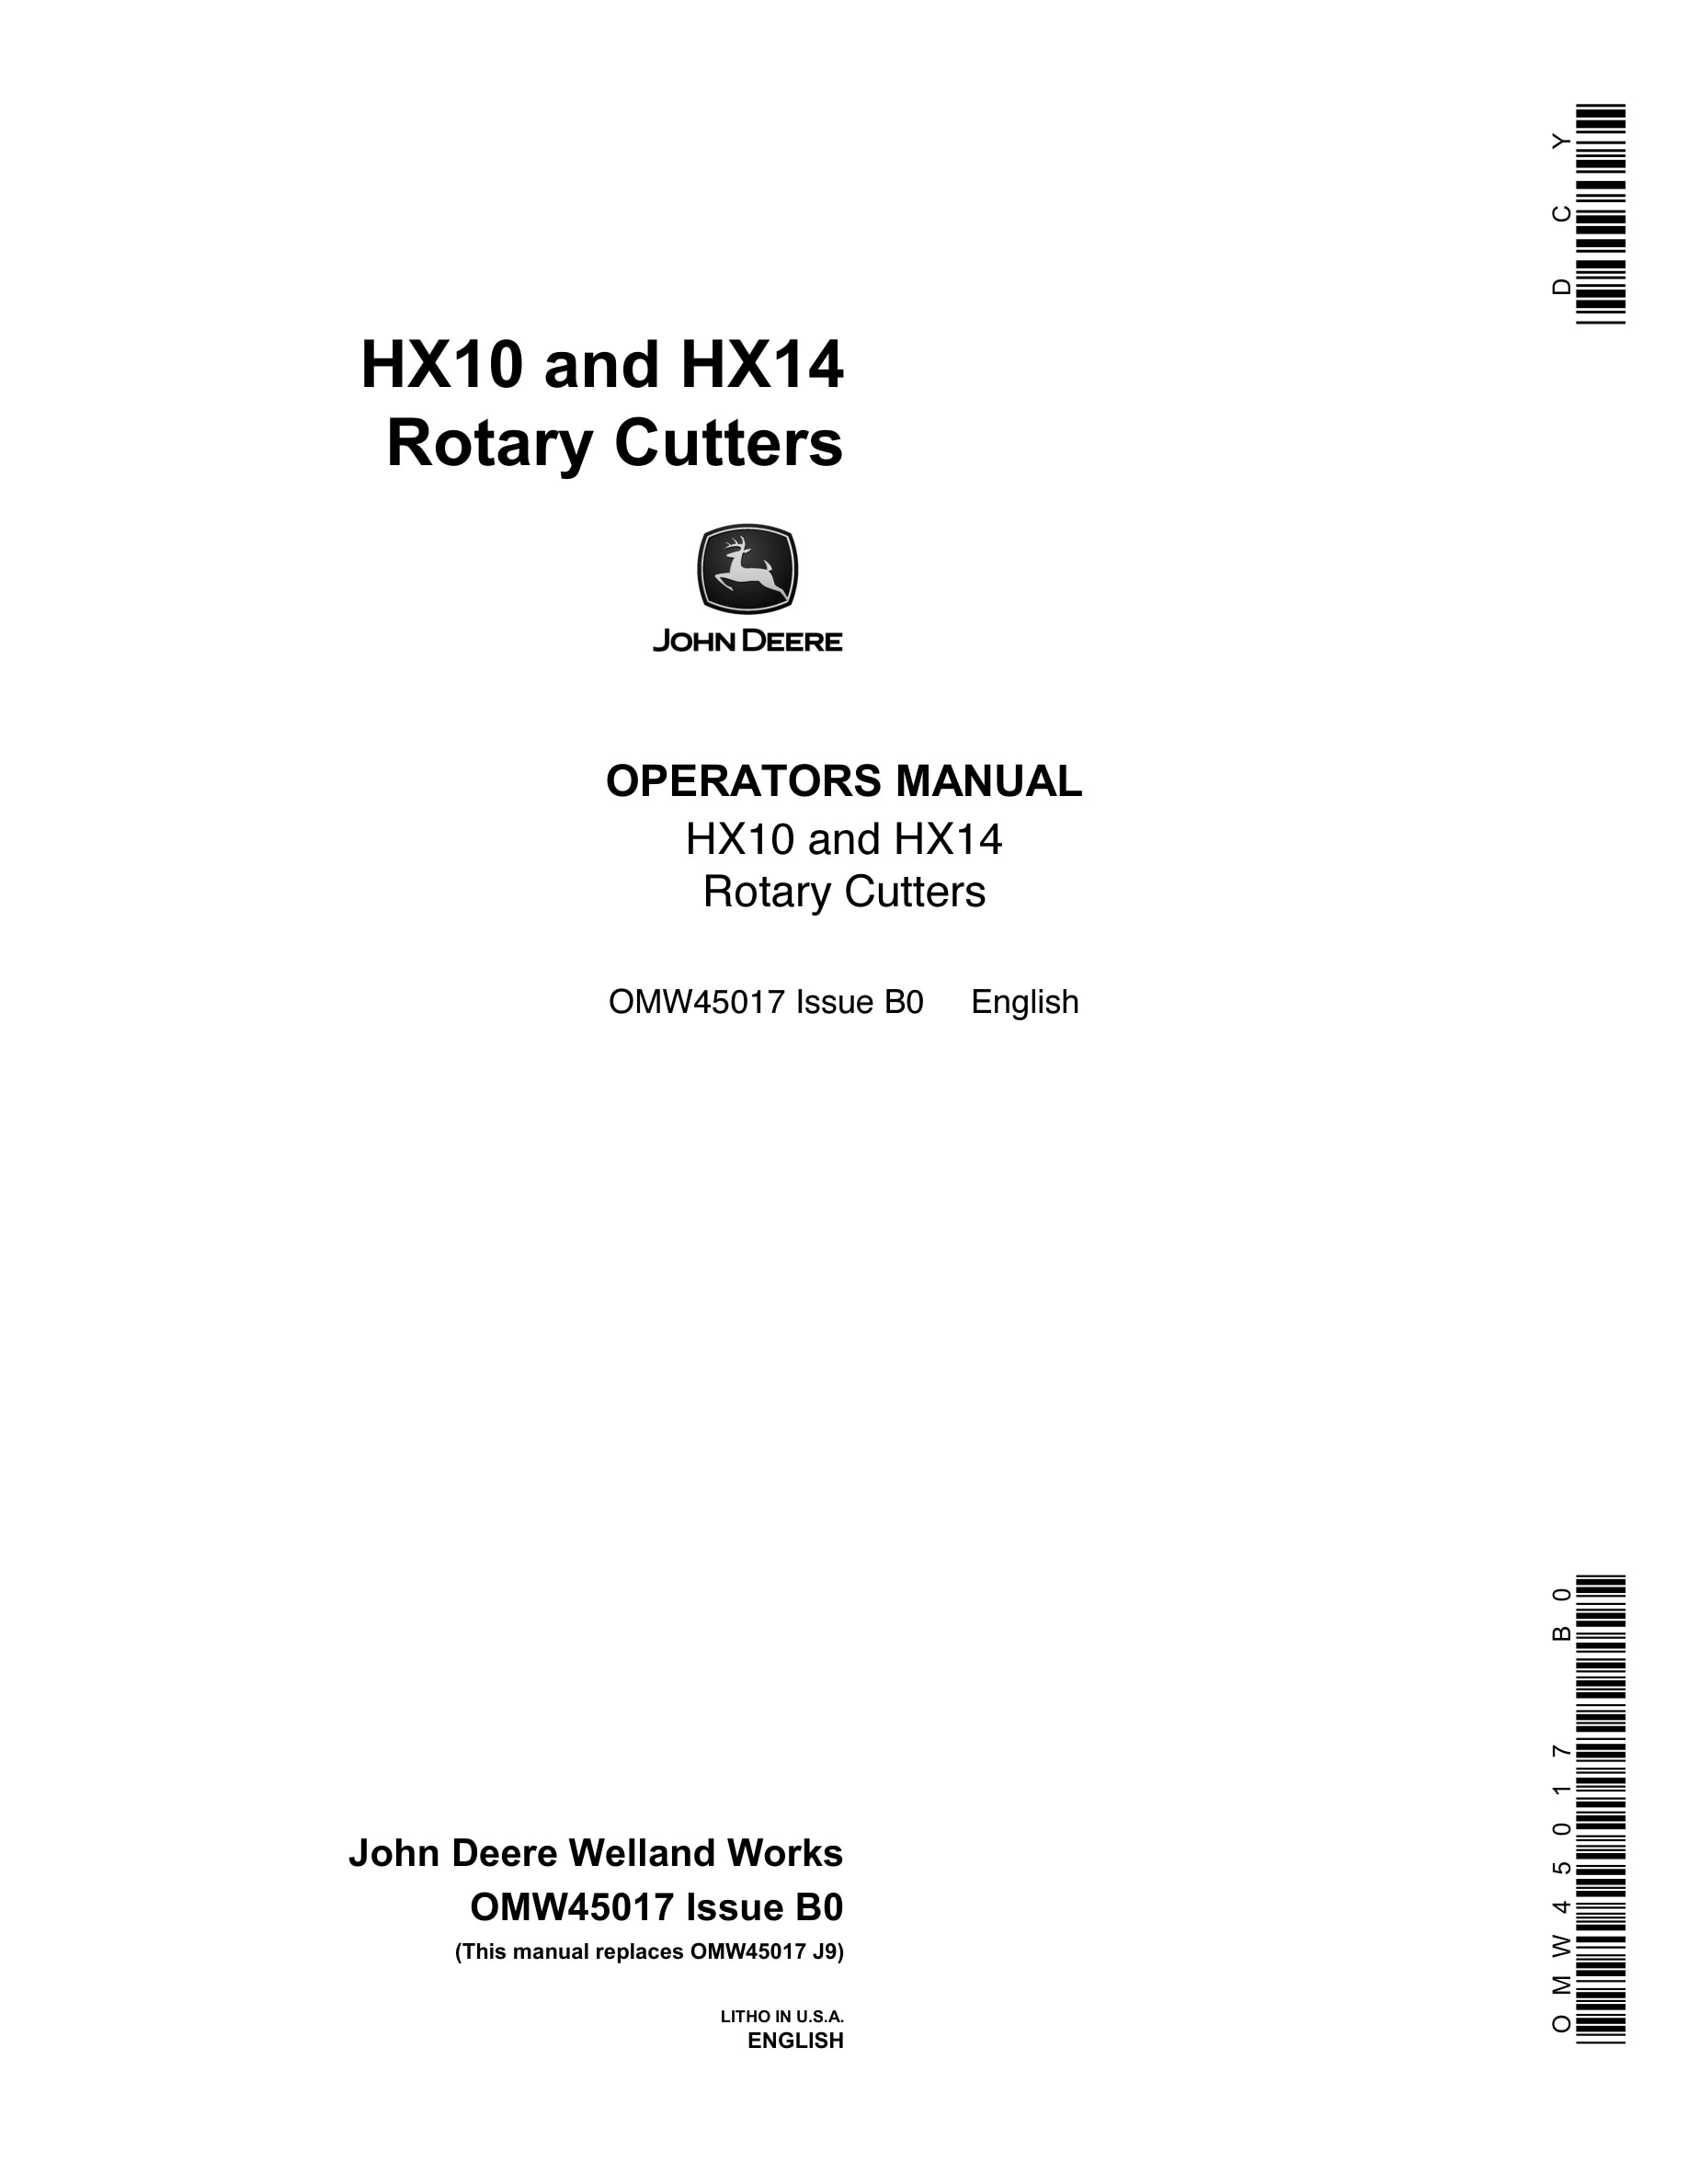 John Deere HX10 and HX14 Rotary Cutter Operator Manual OMW45017-1